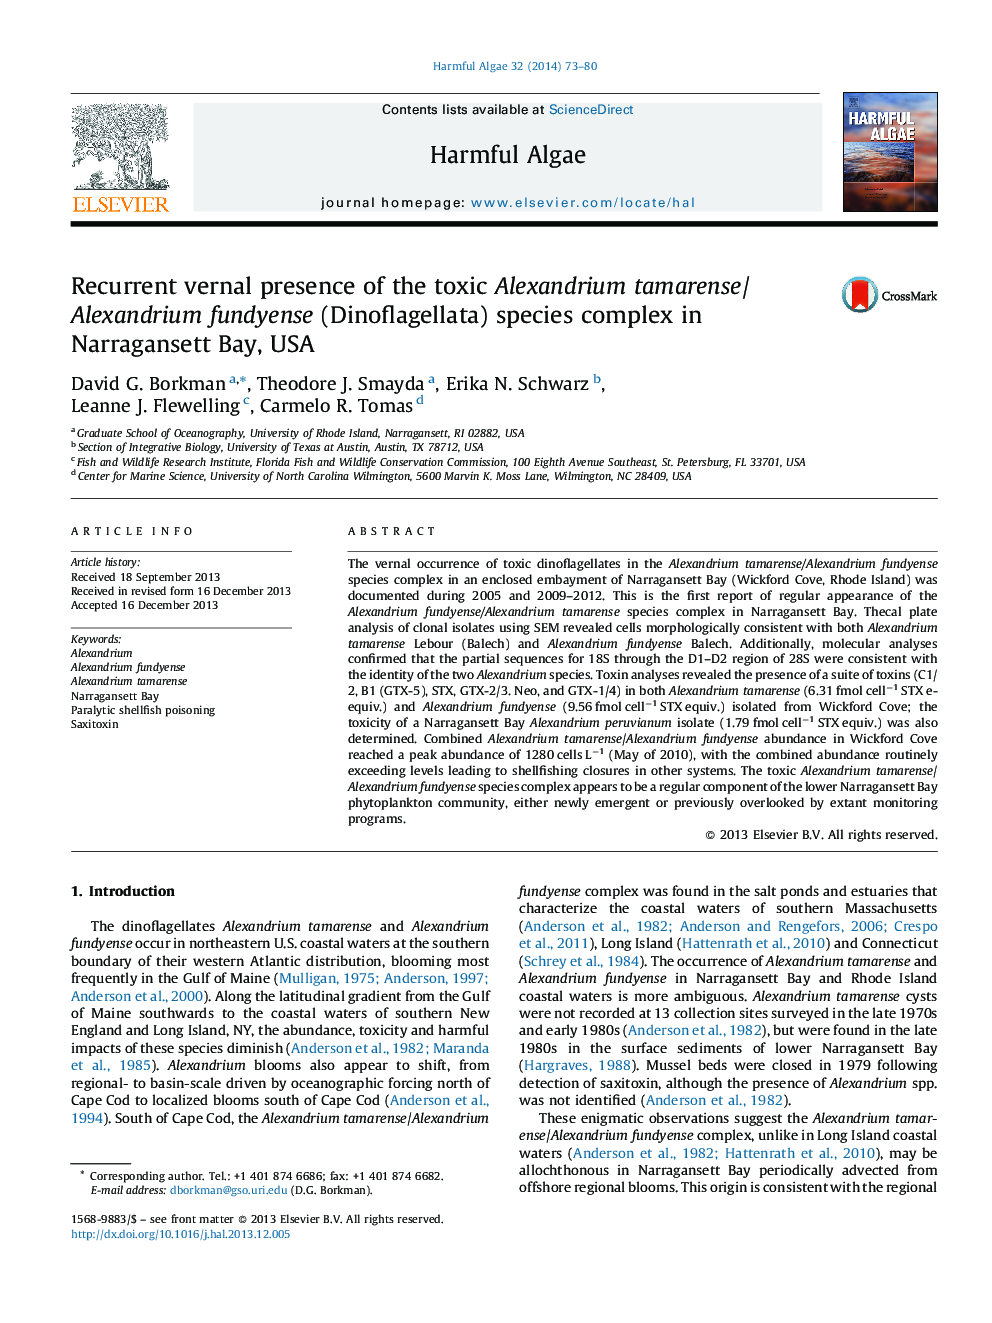 Recurrent vernal presence of the toxic Alexandrium tamarense/Alexandrium fundyense (Dinoflagellata) species complex in Narragansett Bay, USA